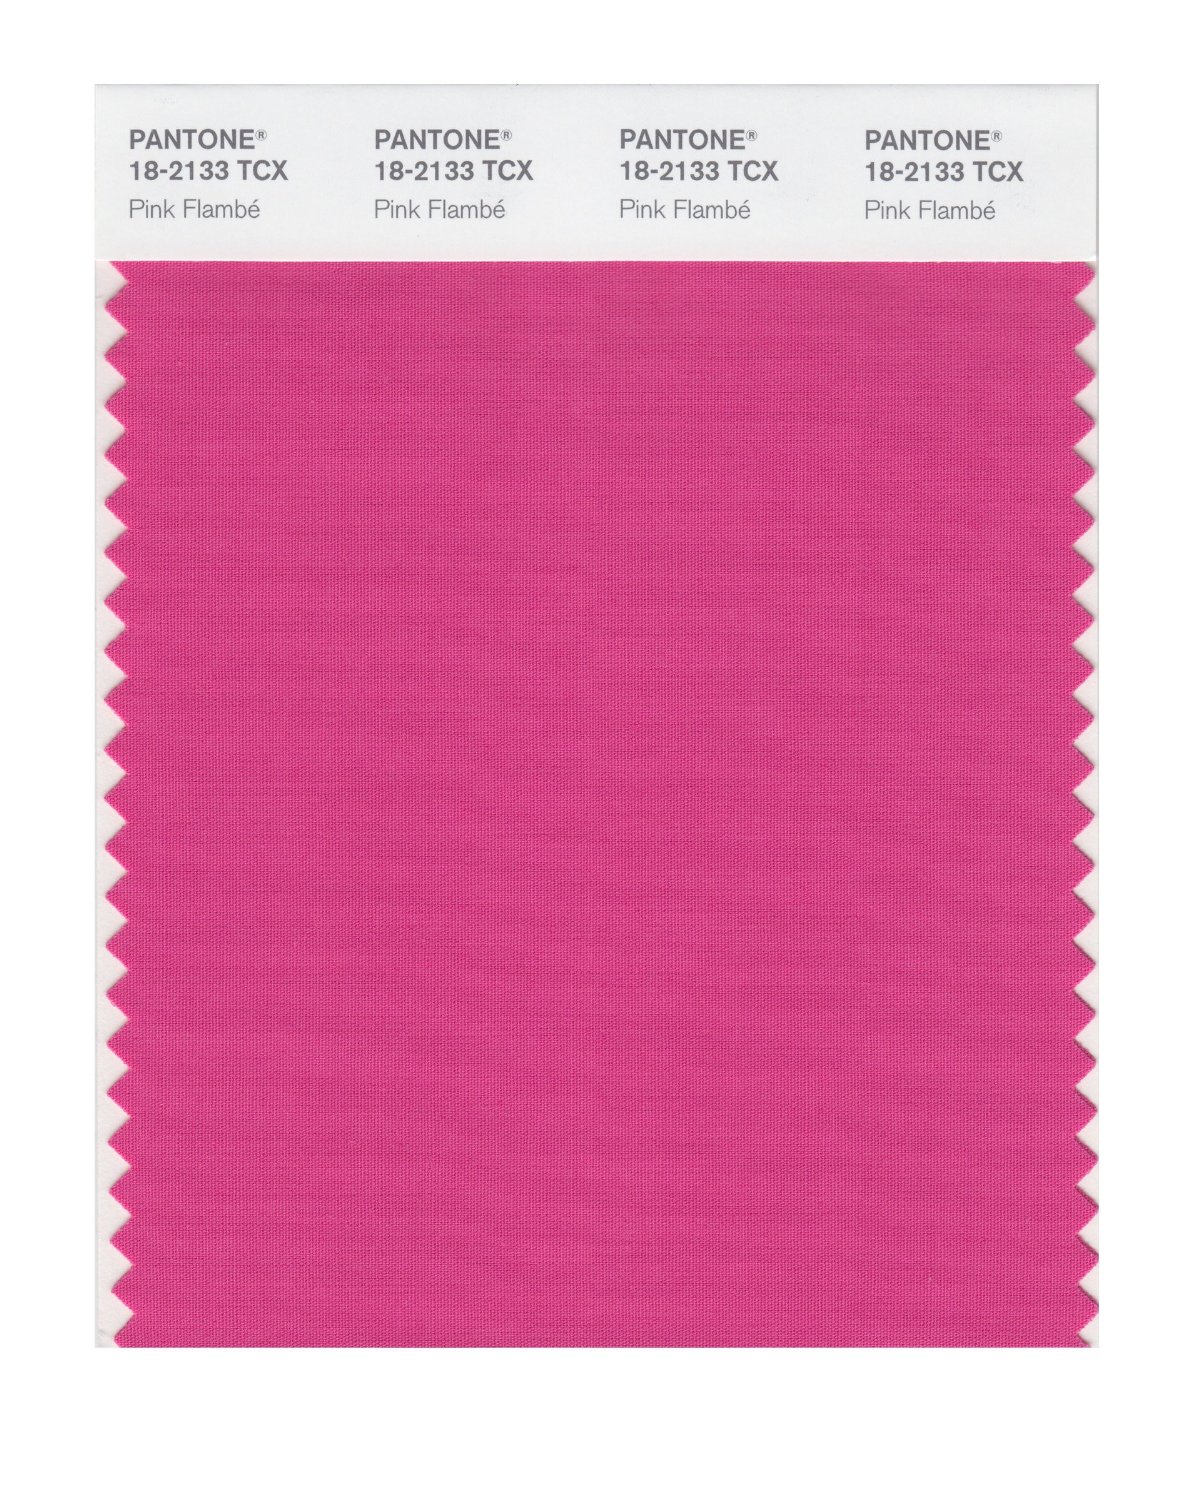 Pantone Cotton Swatch 18-2133 Pink Flambe